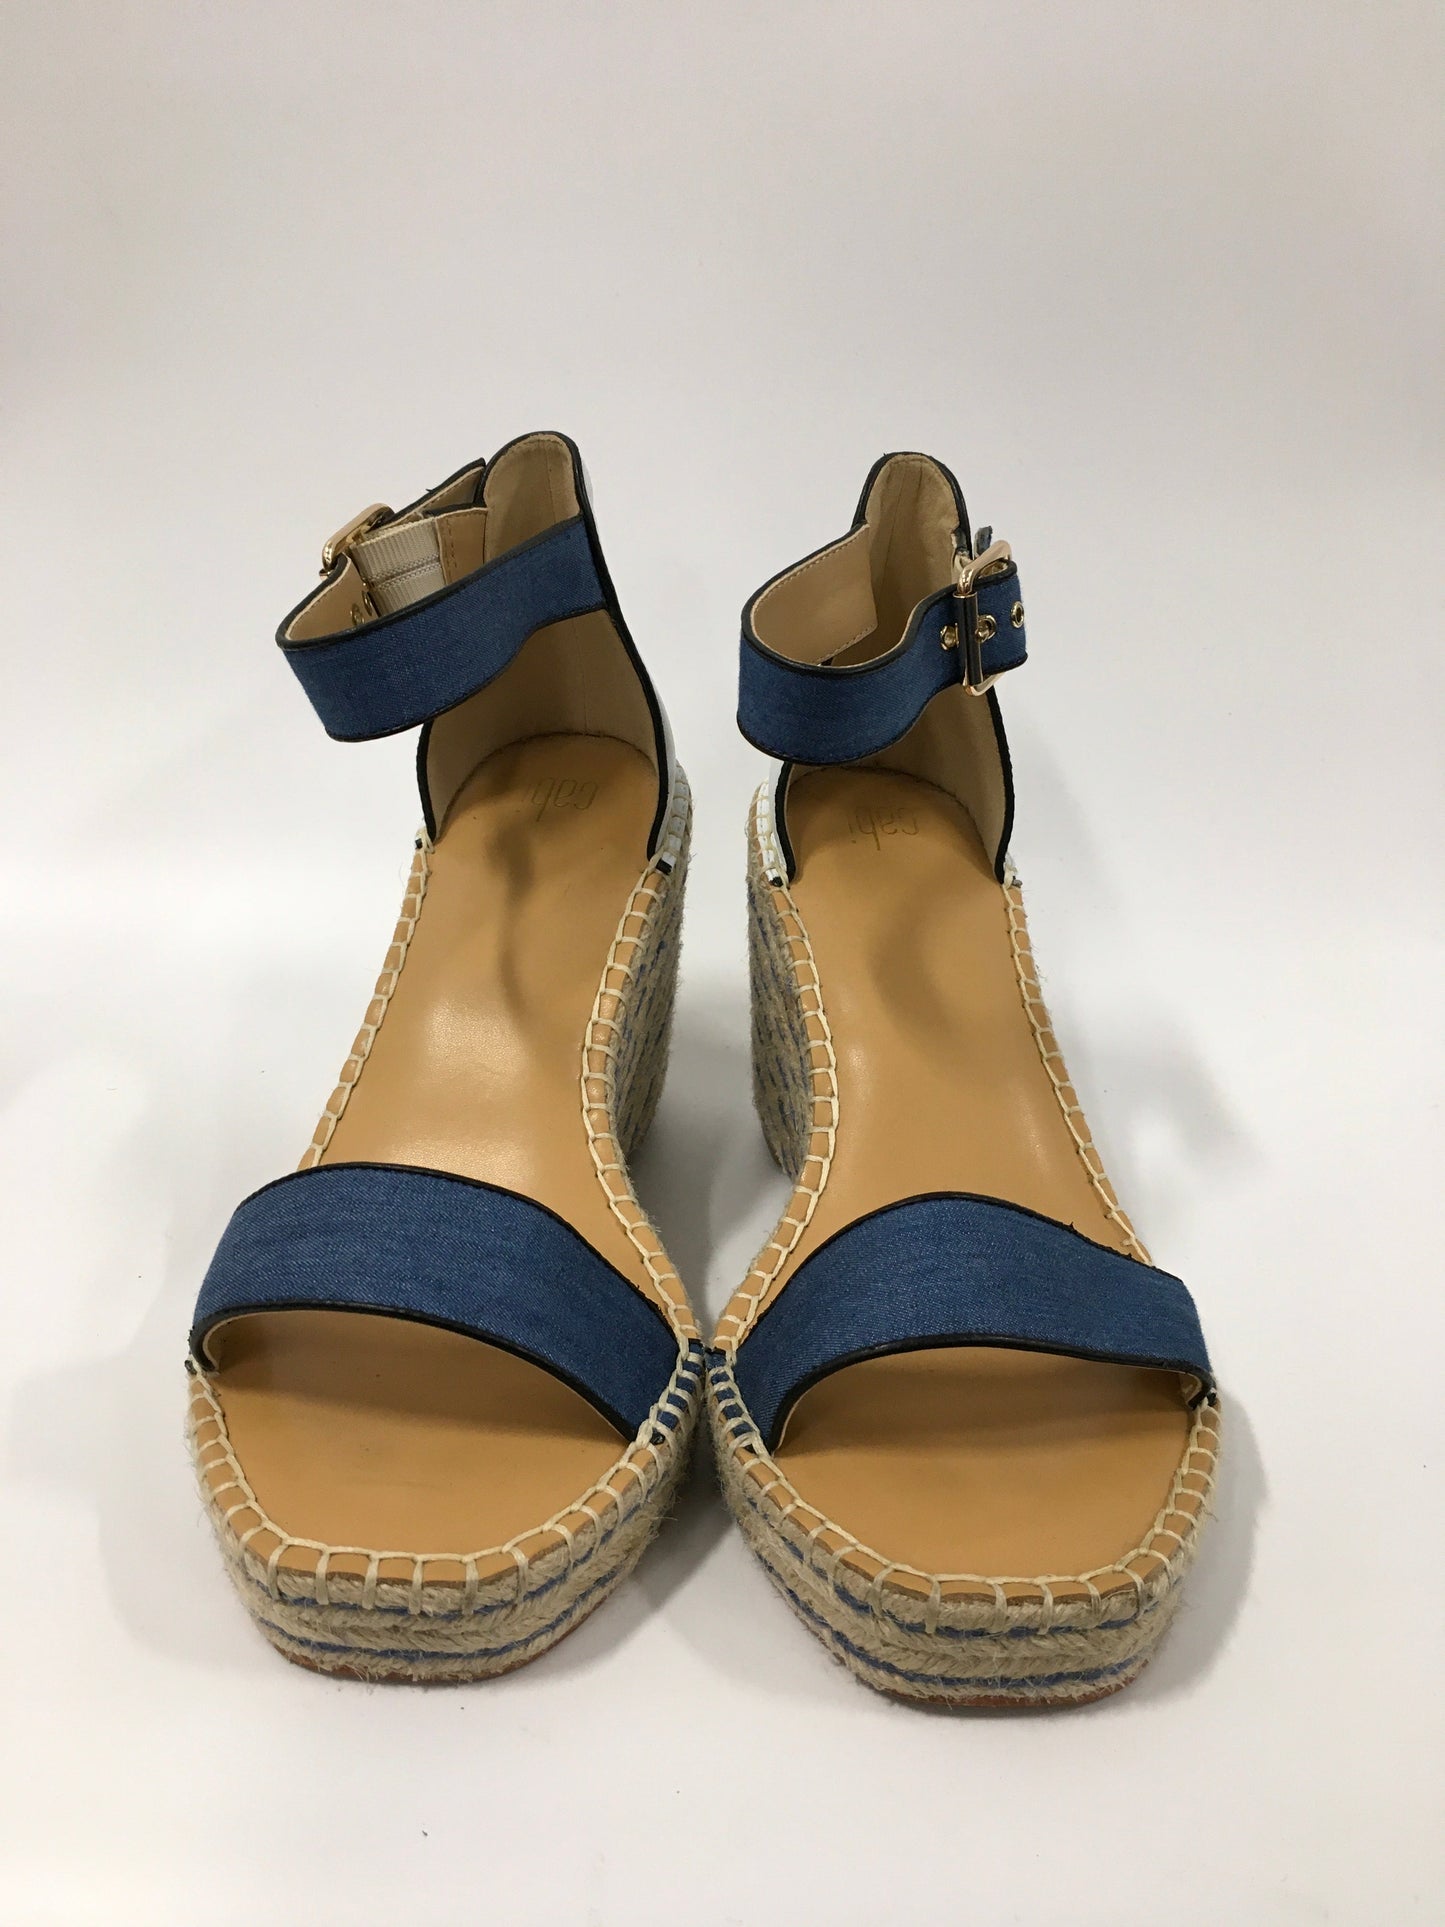 Blue Sandals Heels Wedge Cabi, Size 9